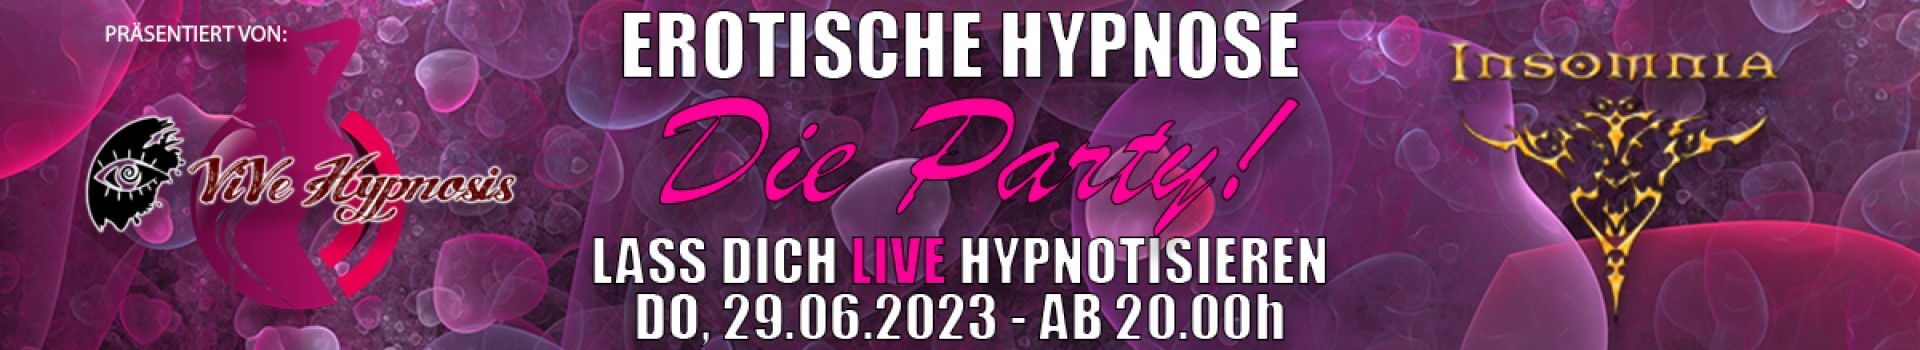 Hypnose érotique - Live